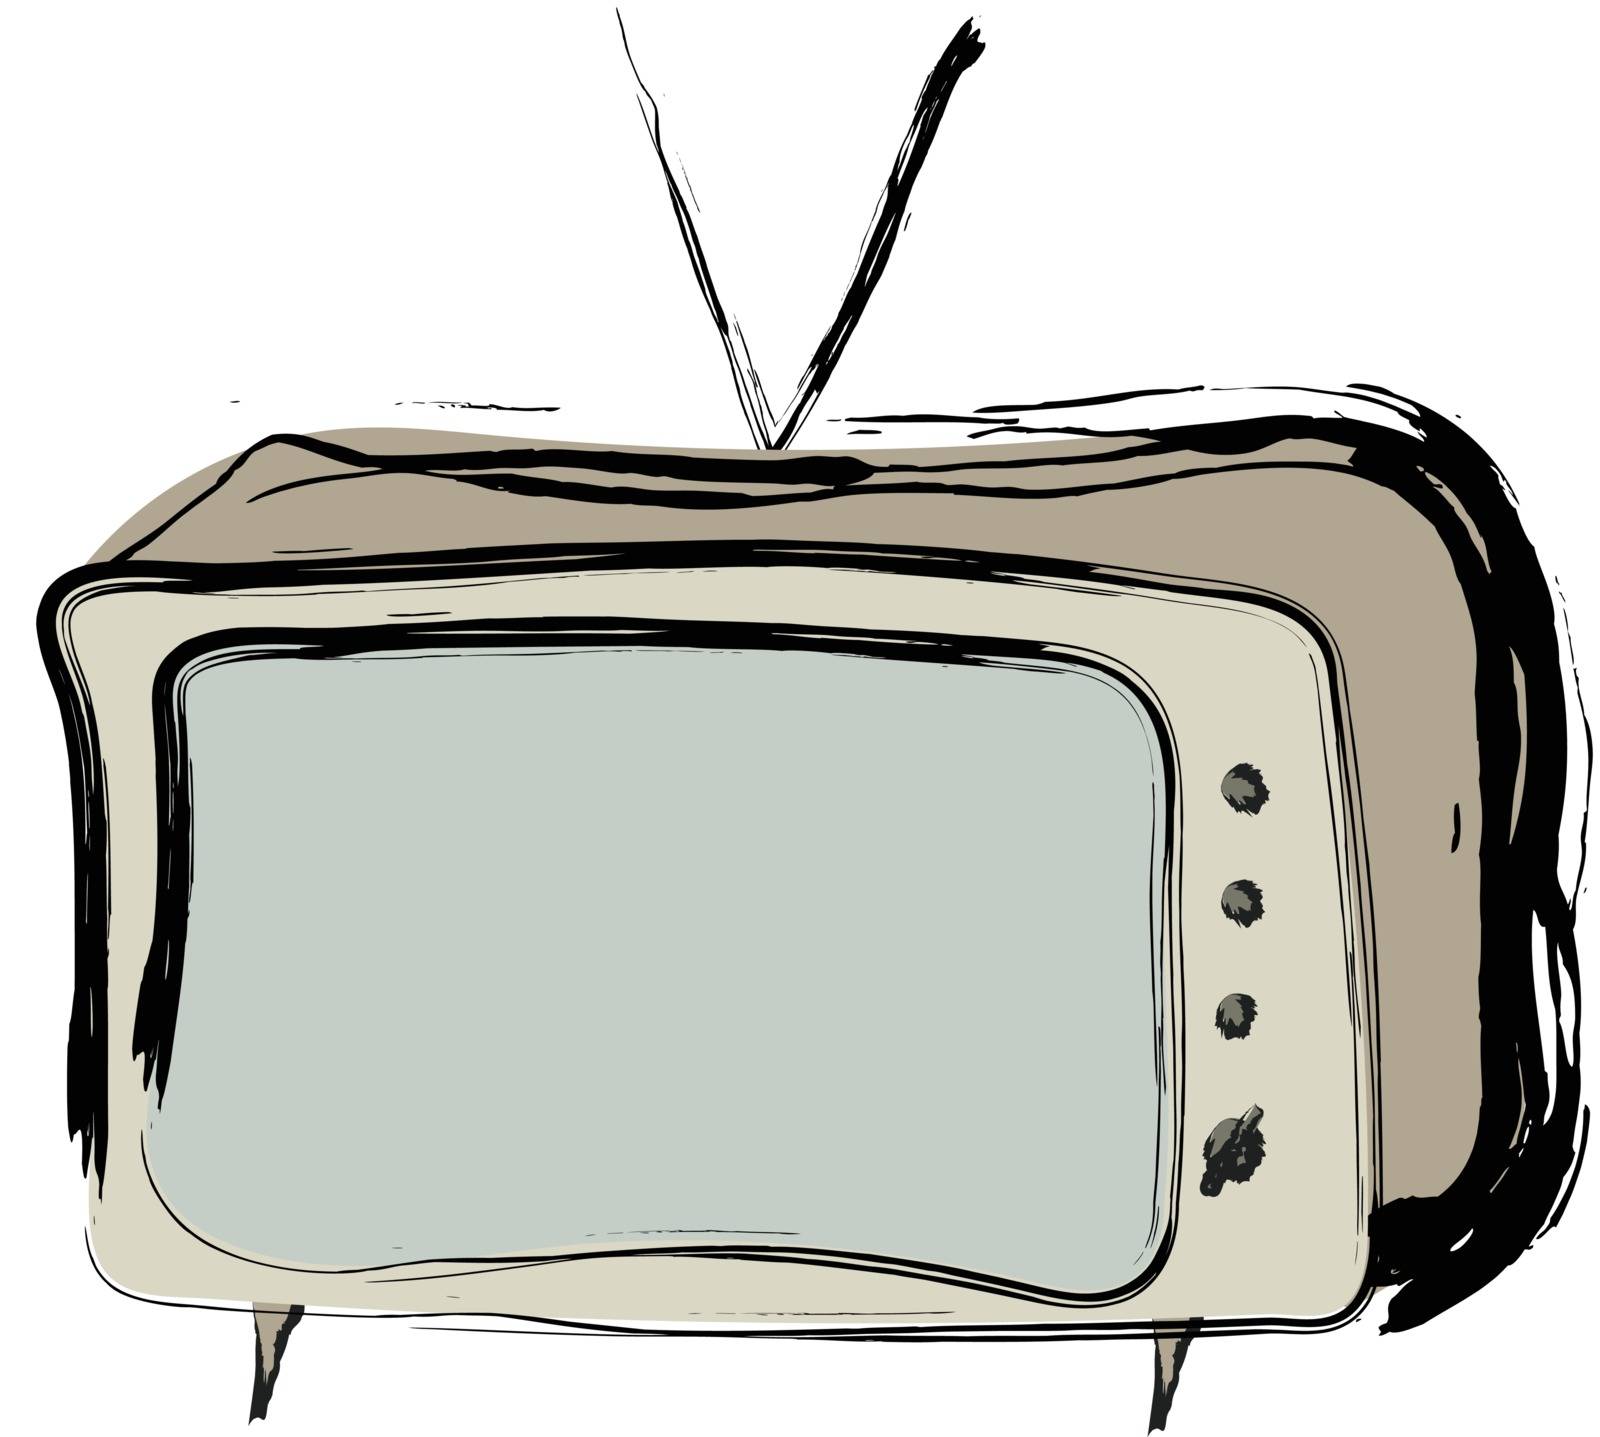 Retro television on white background